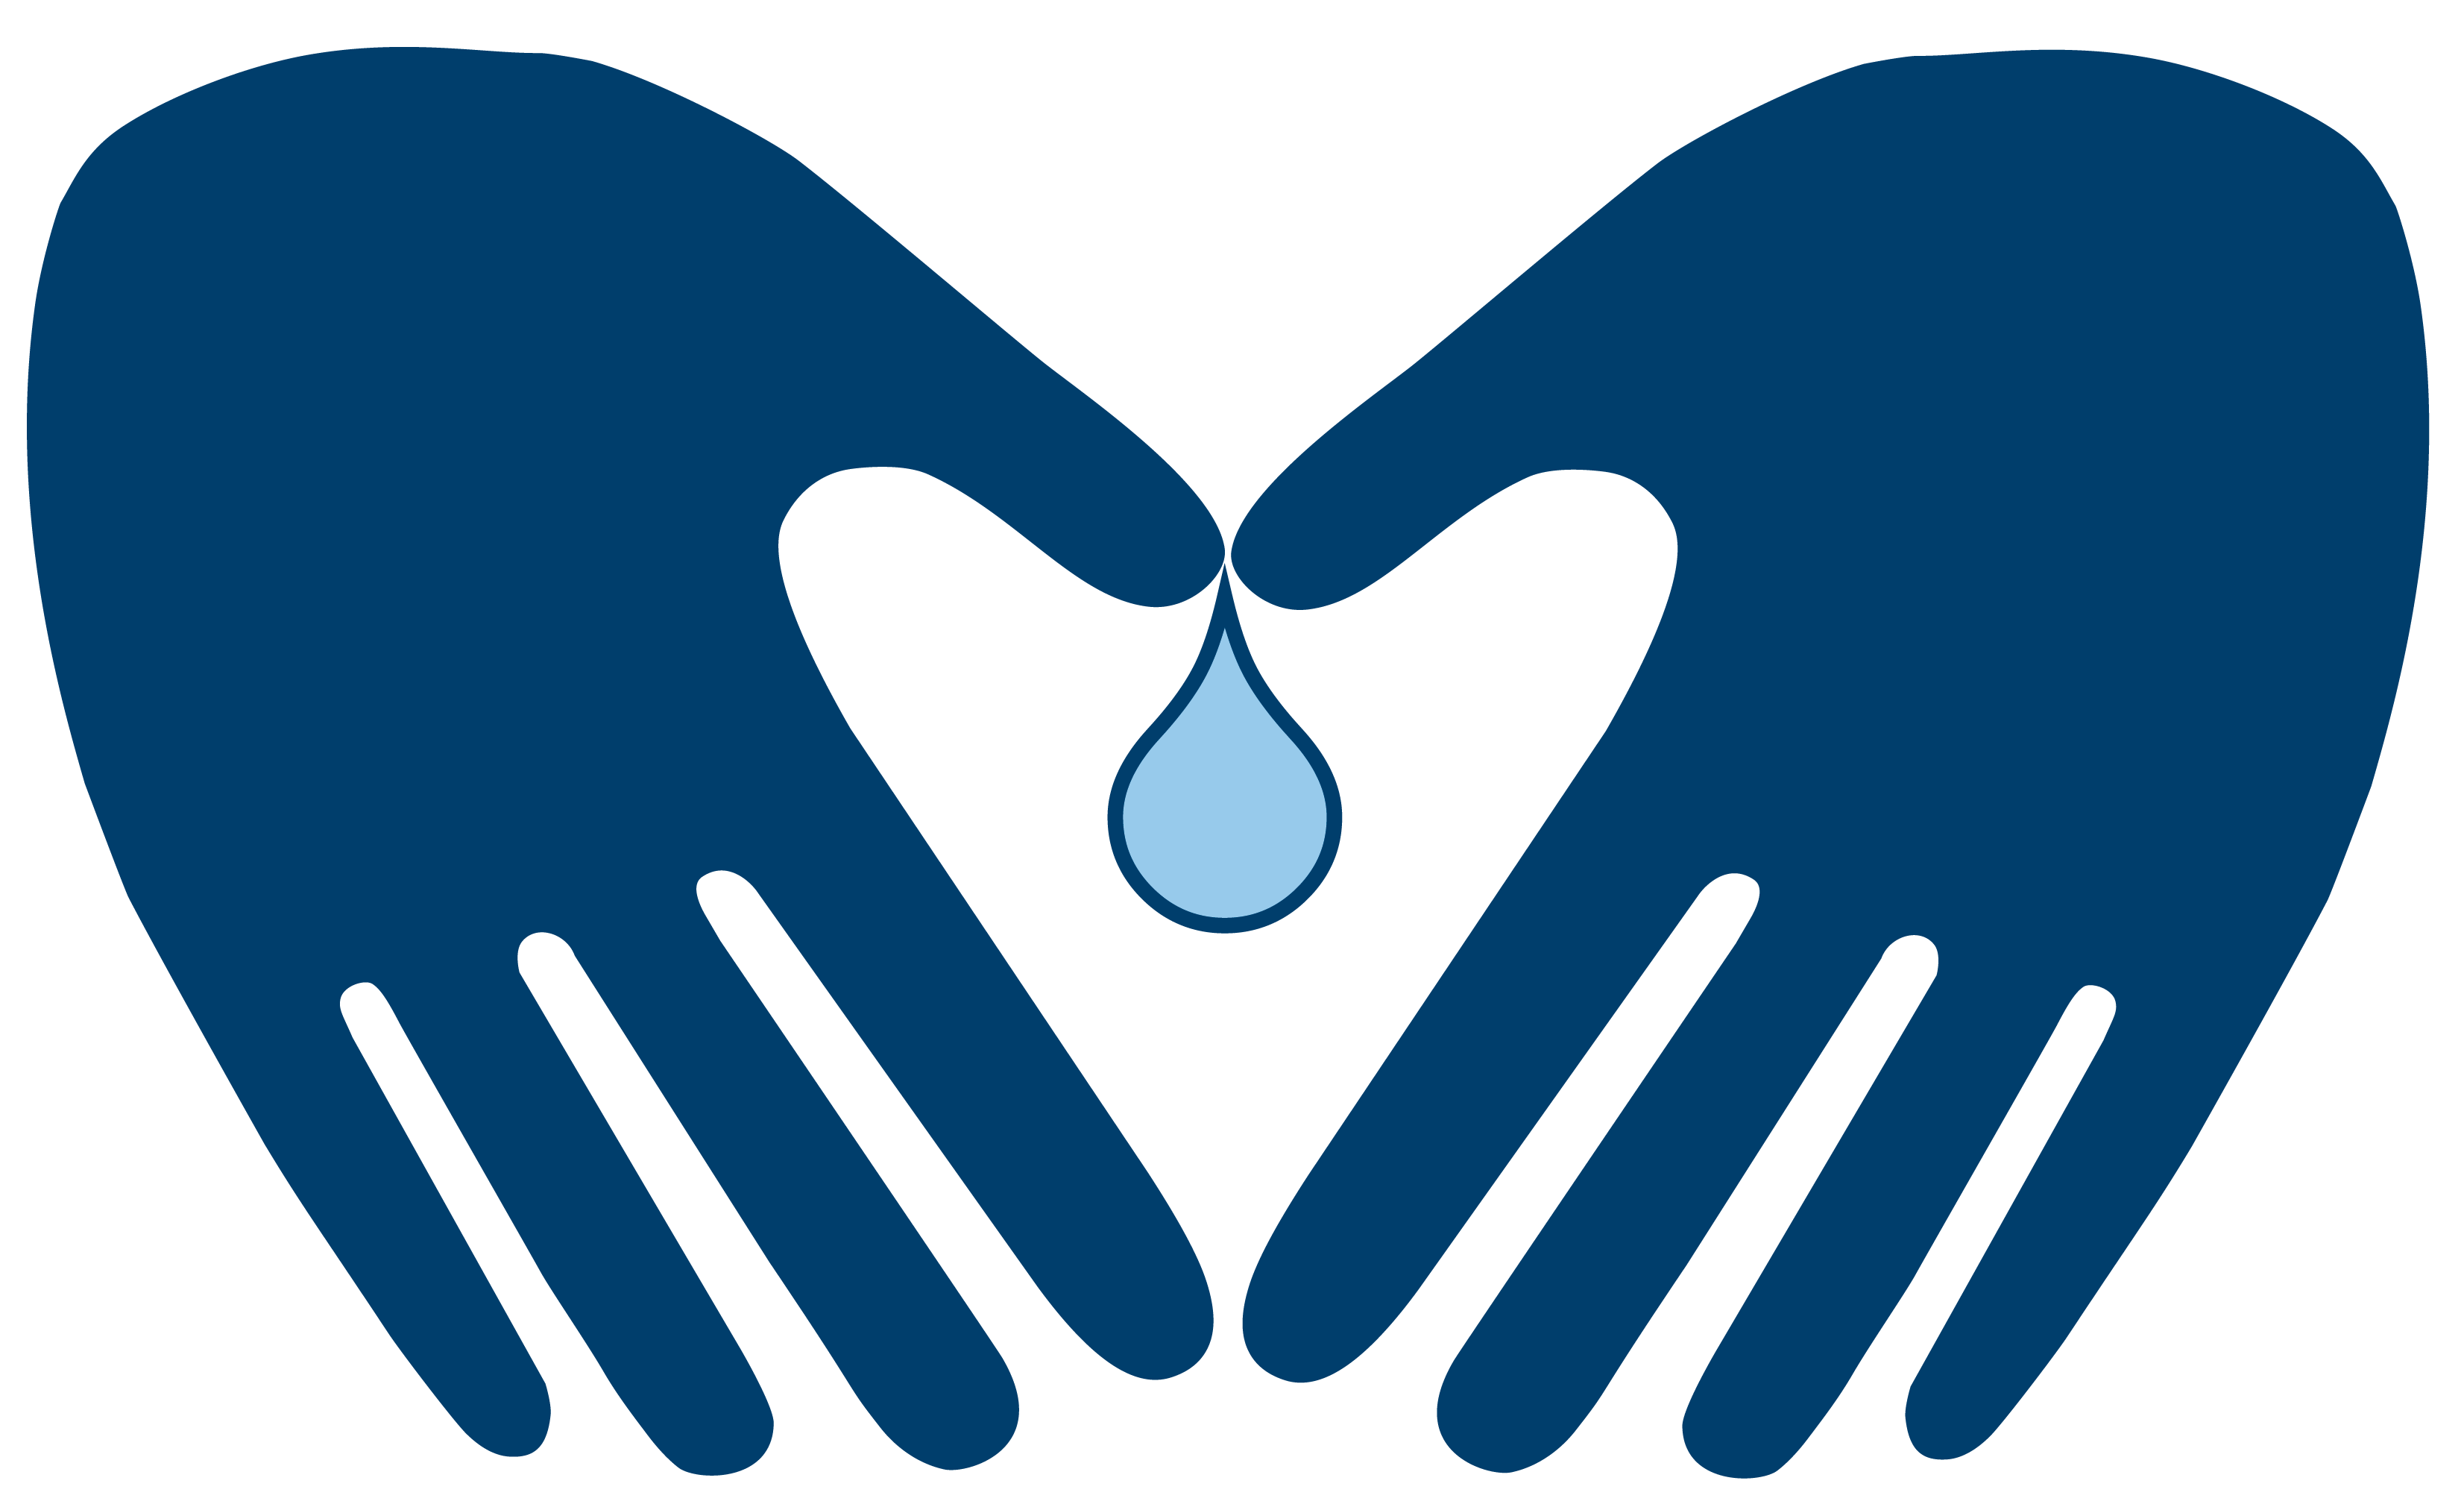 Graphic of hands surrounding water droplet